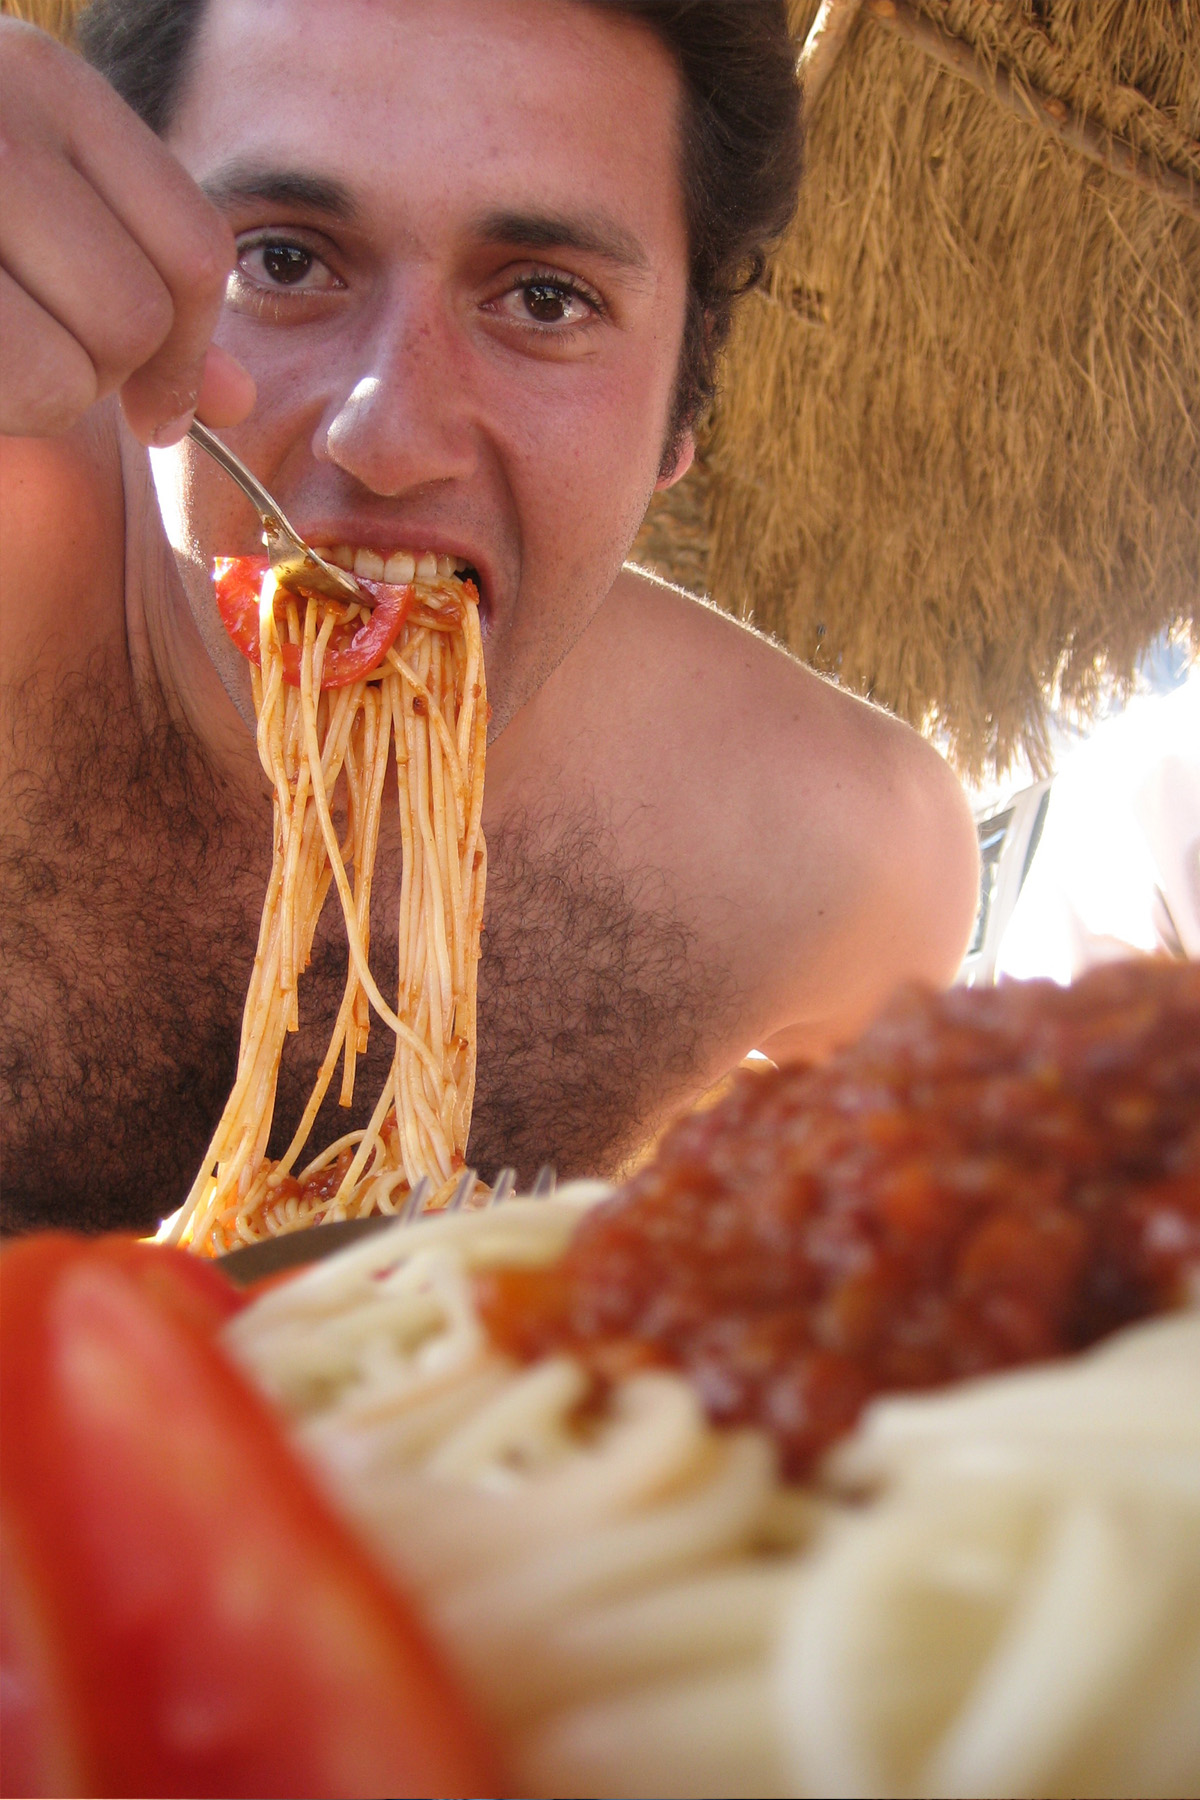 Man eating spaghetti photo